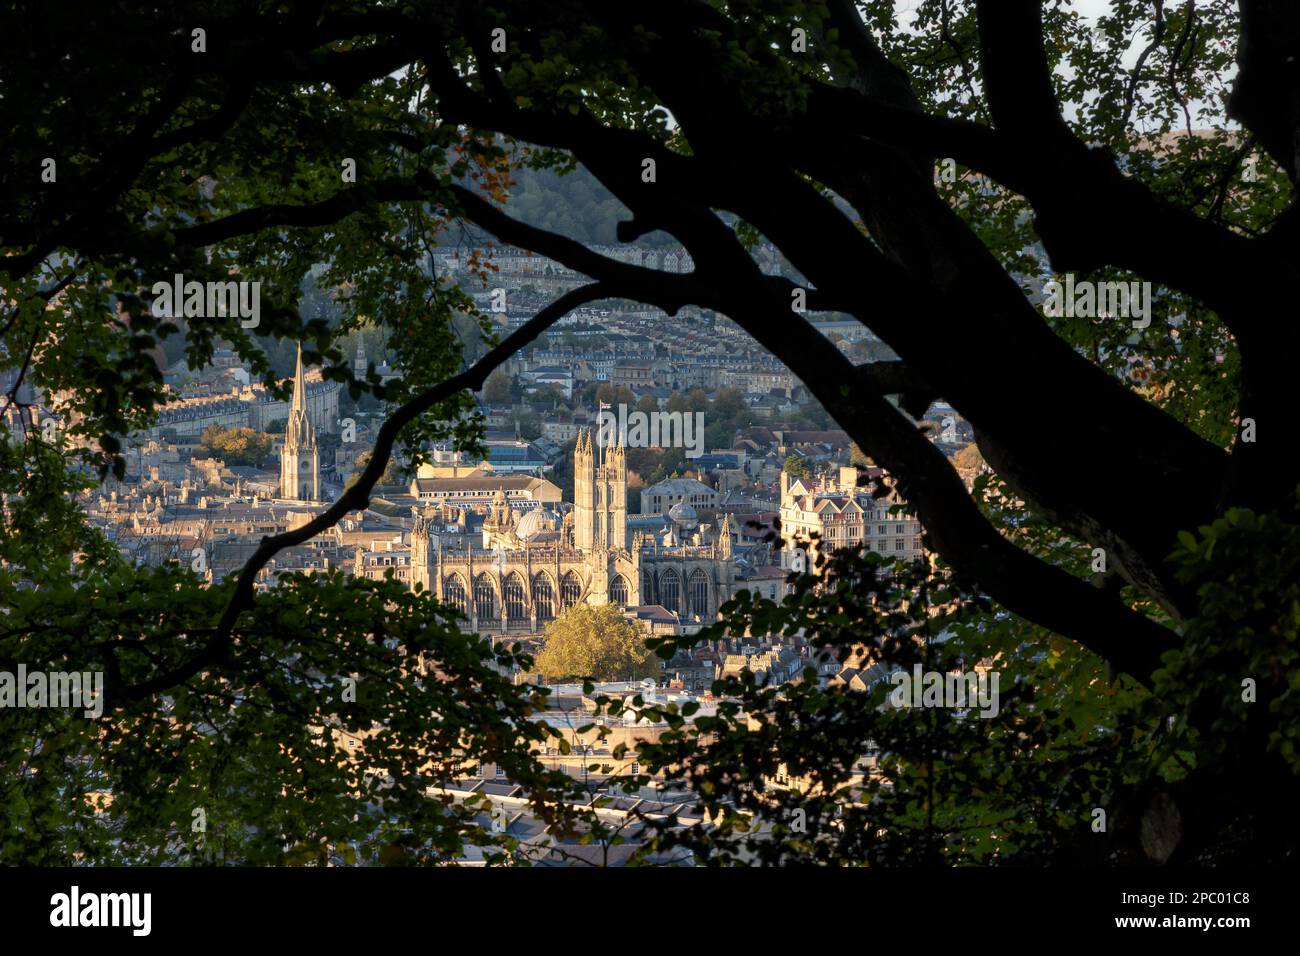 Bath Abbey and city landmarks viewed through the trees in Alexandra Park, Beechen Cliff, Bath, England, UK Stock Photo